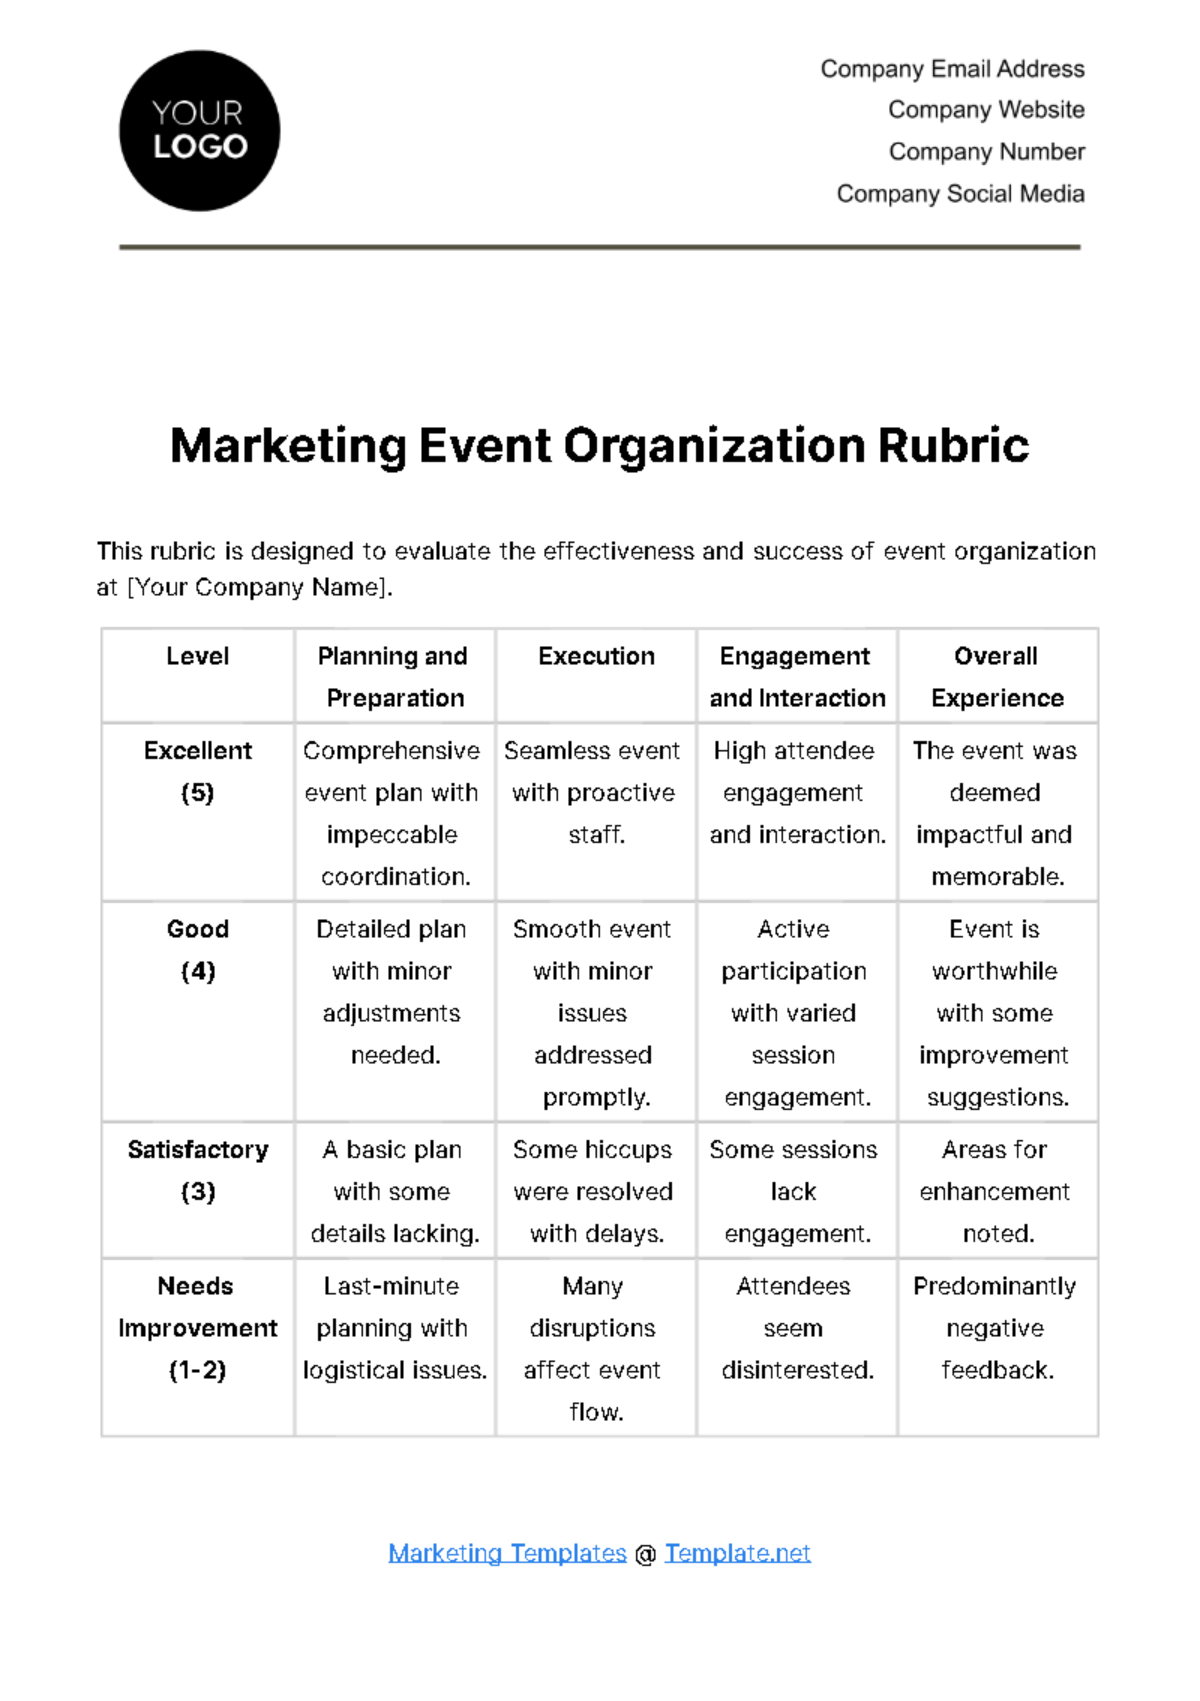 Free Marketing Event Organization Rubric Template